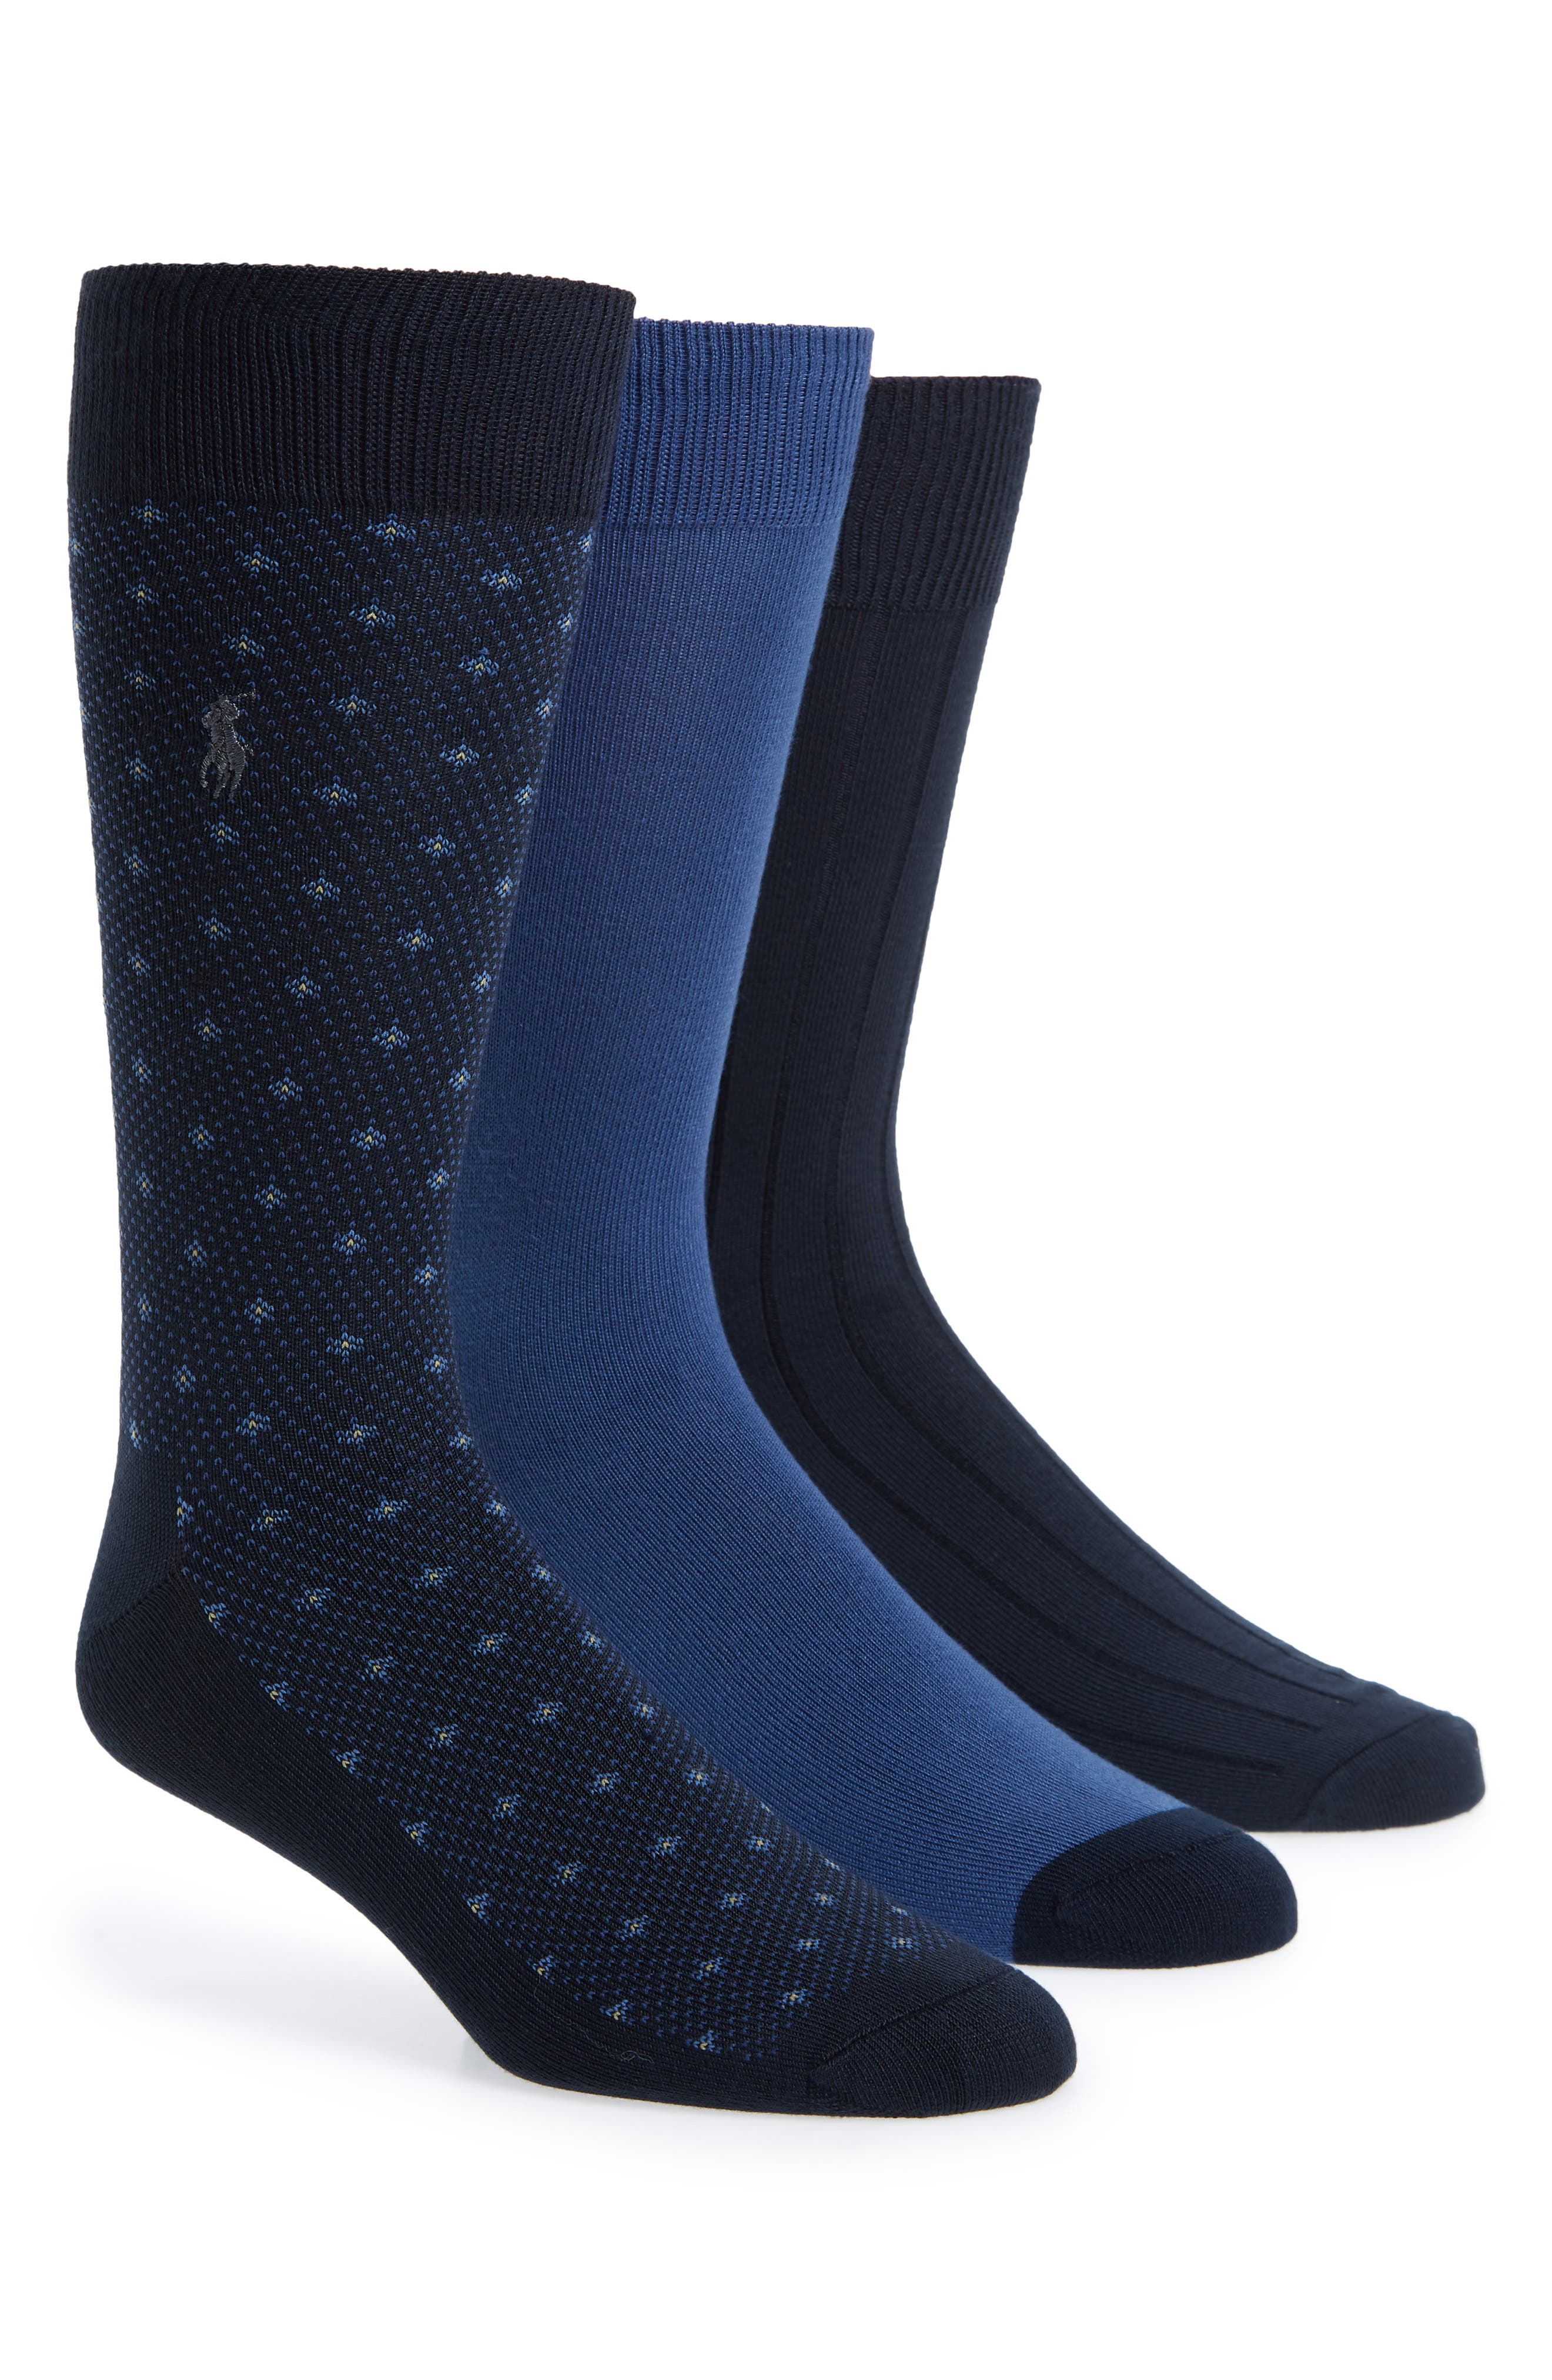 ralph lauren dress socks